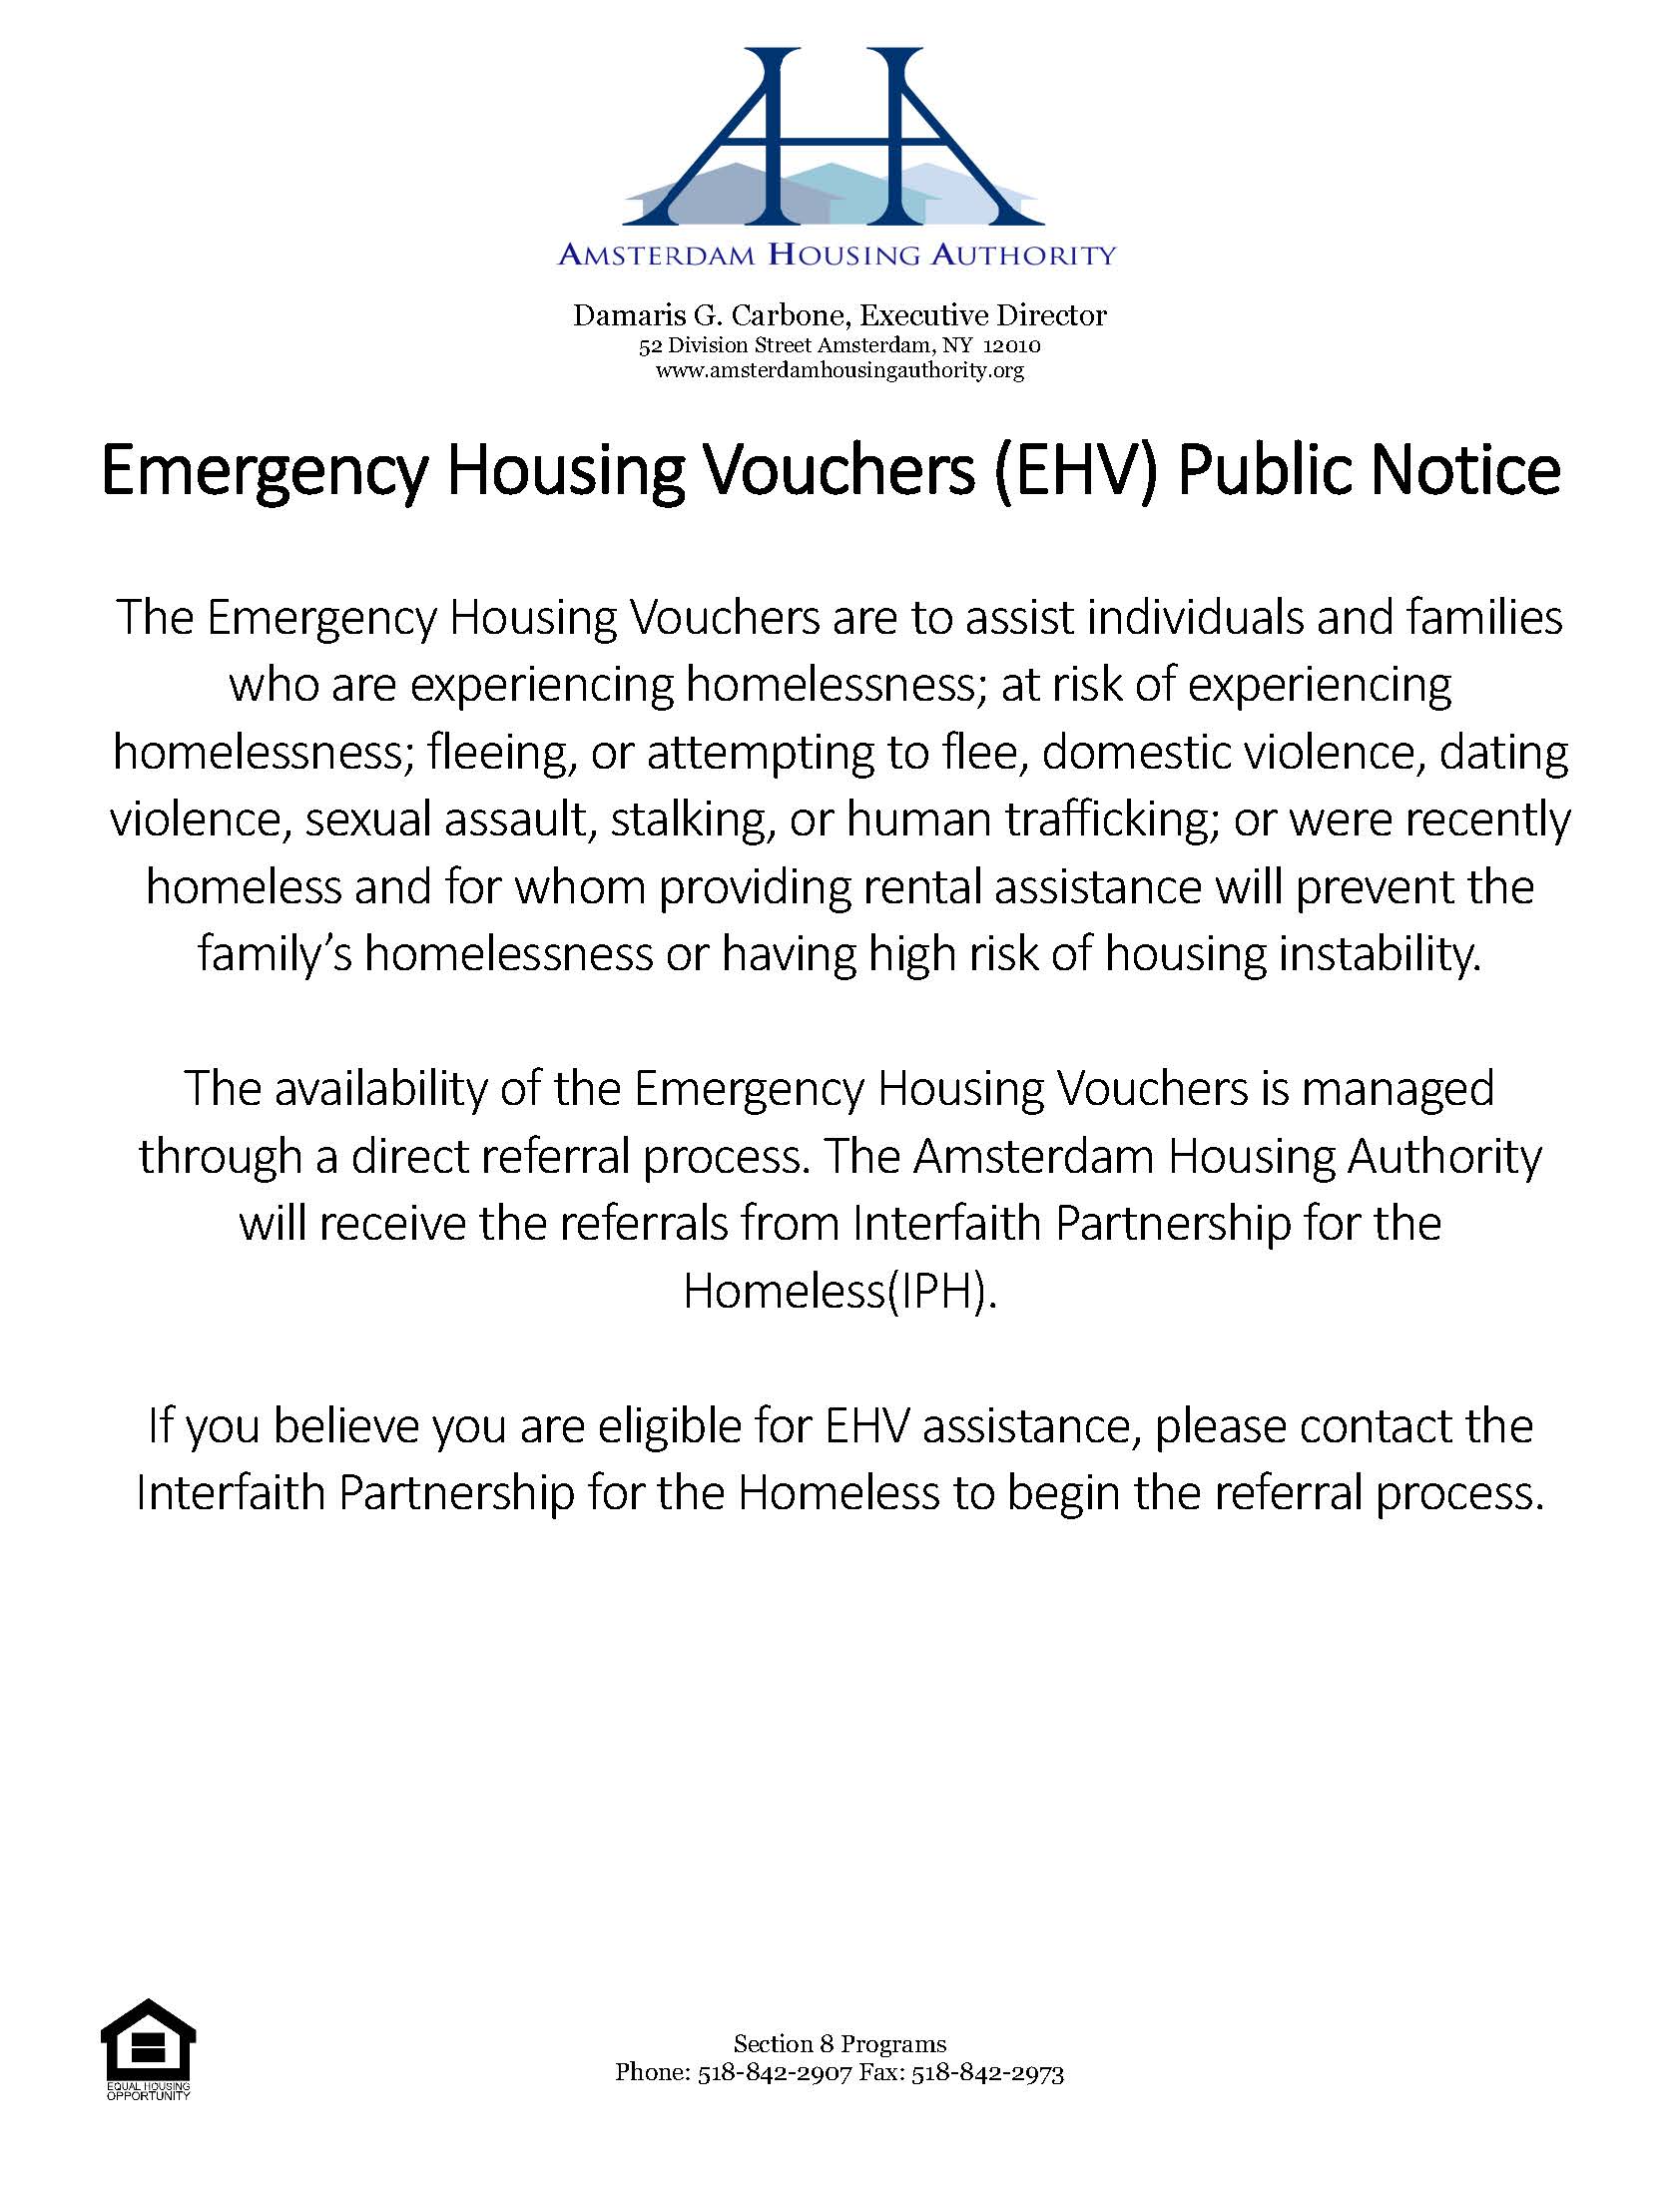 EHV Public Notice 2021_Page_1